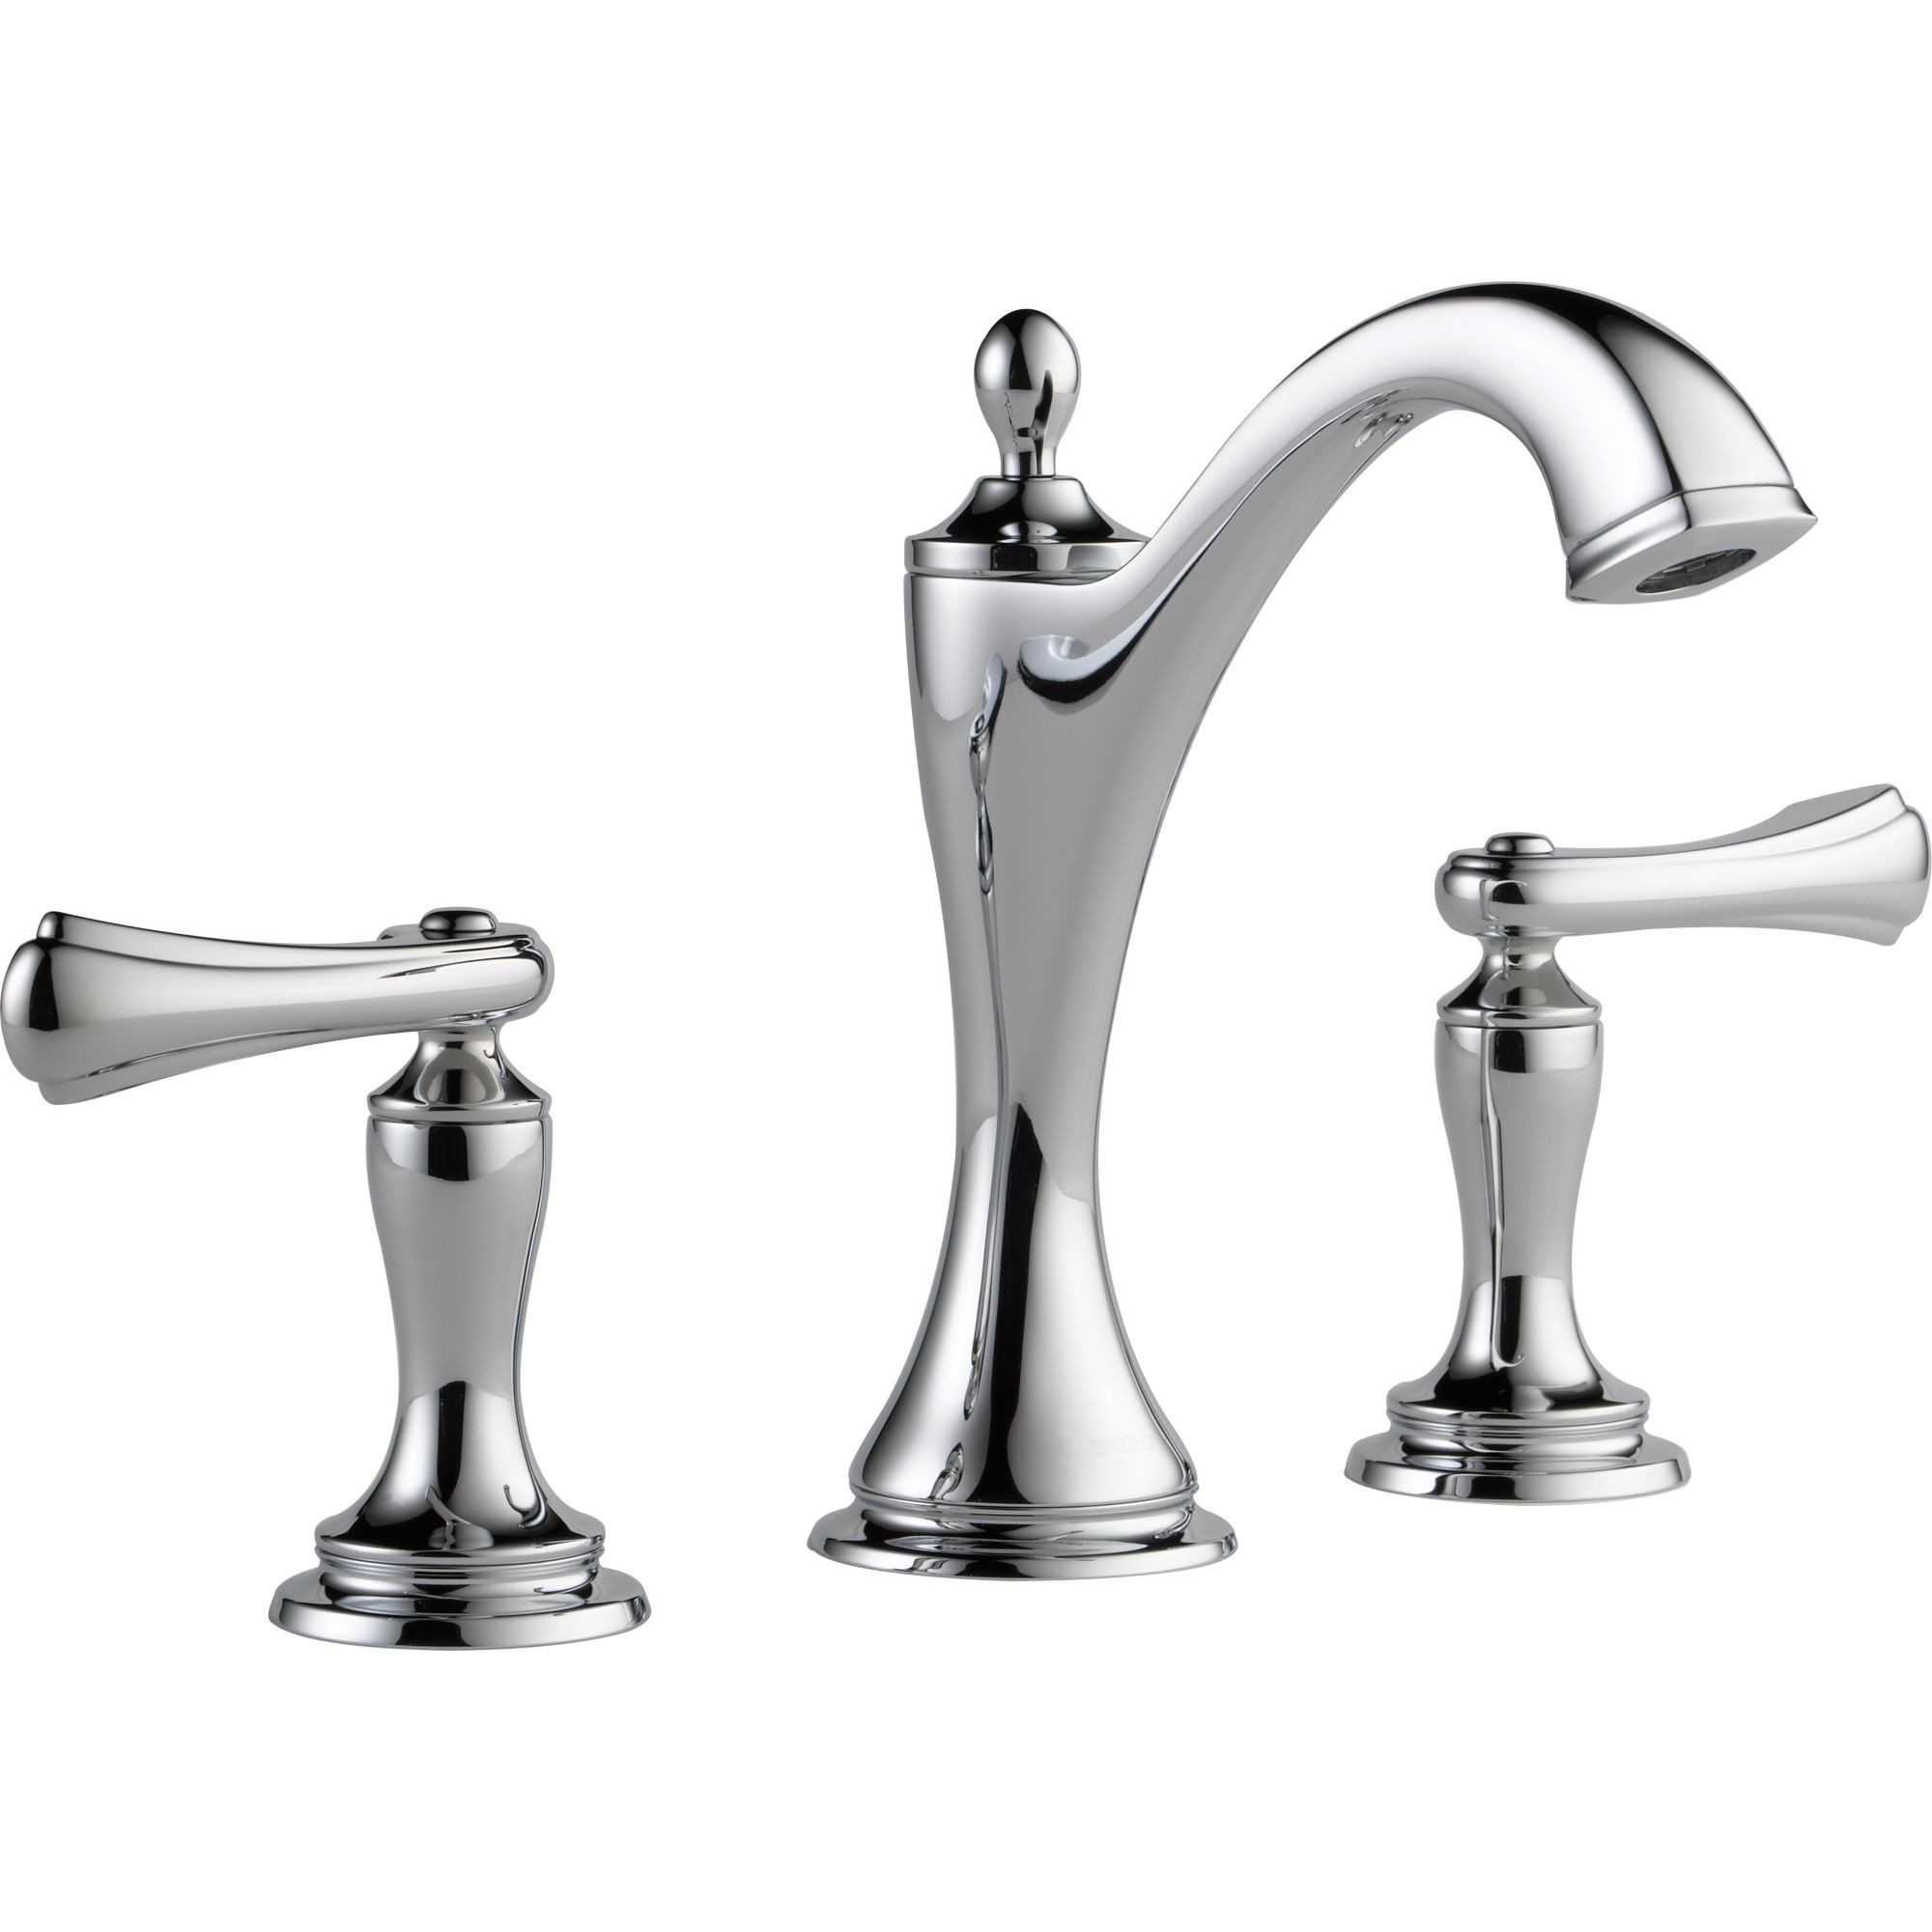 Brizo Bathroom Faucets
 Brizo Charlotte Widespread Lavatory Faucet Group Domain